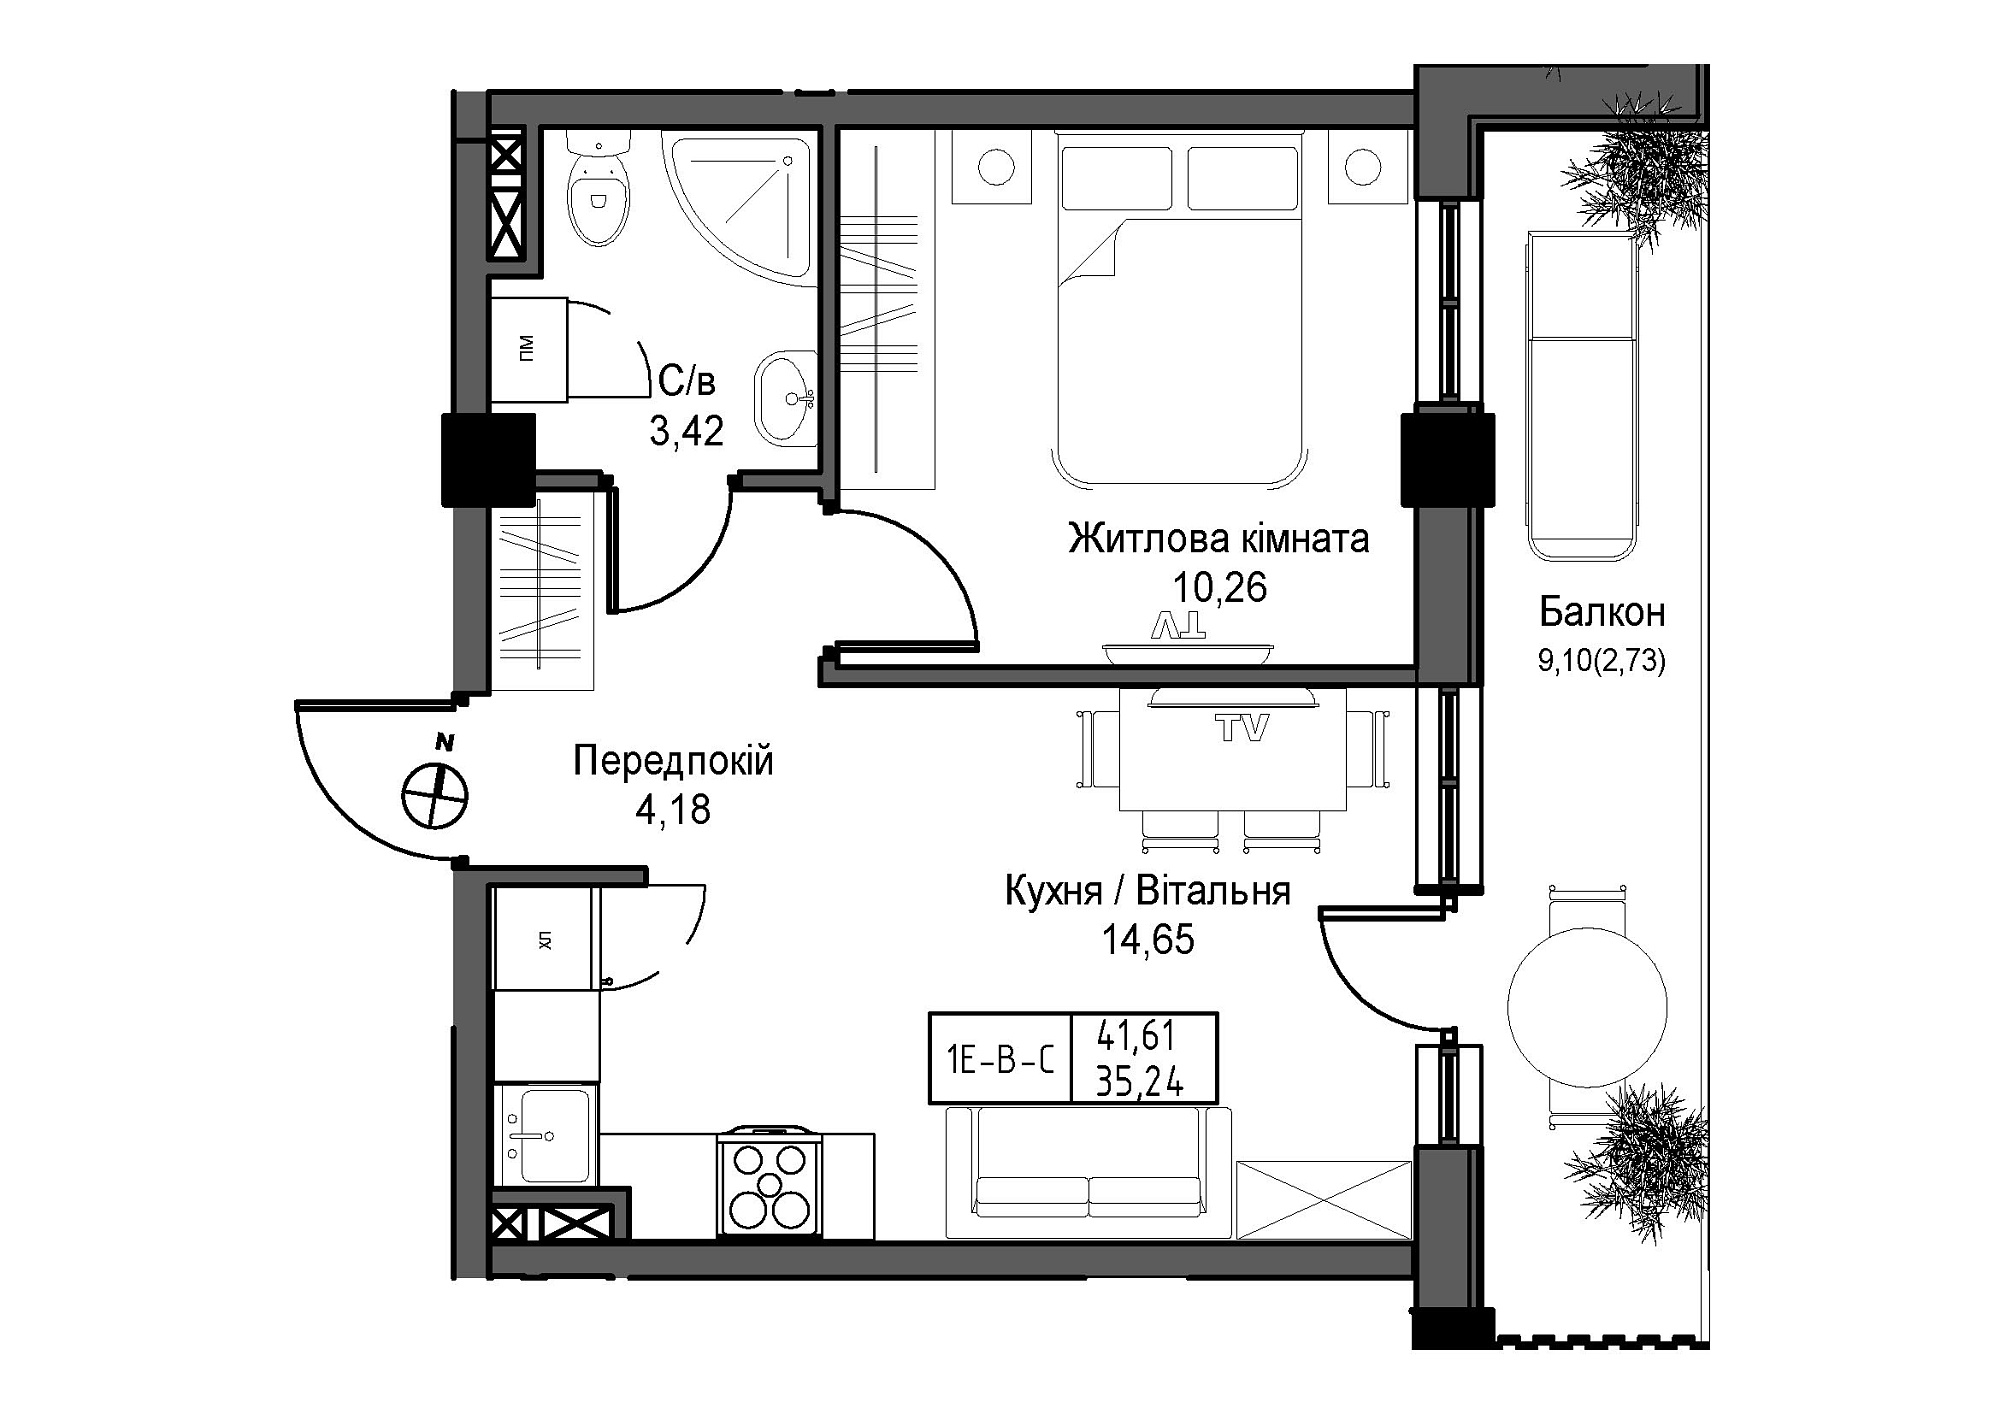 Планування 1-к квартира площею 35.24м2, UM-007-09/0004.